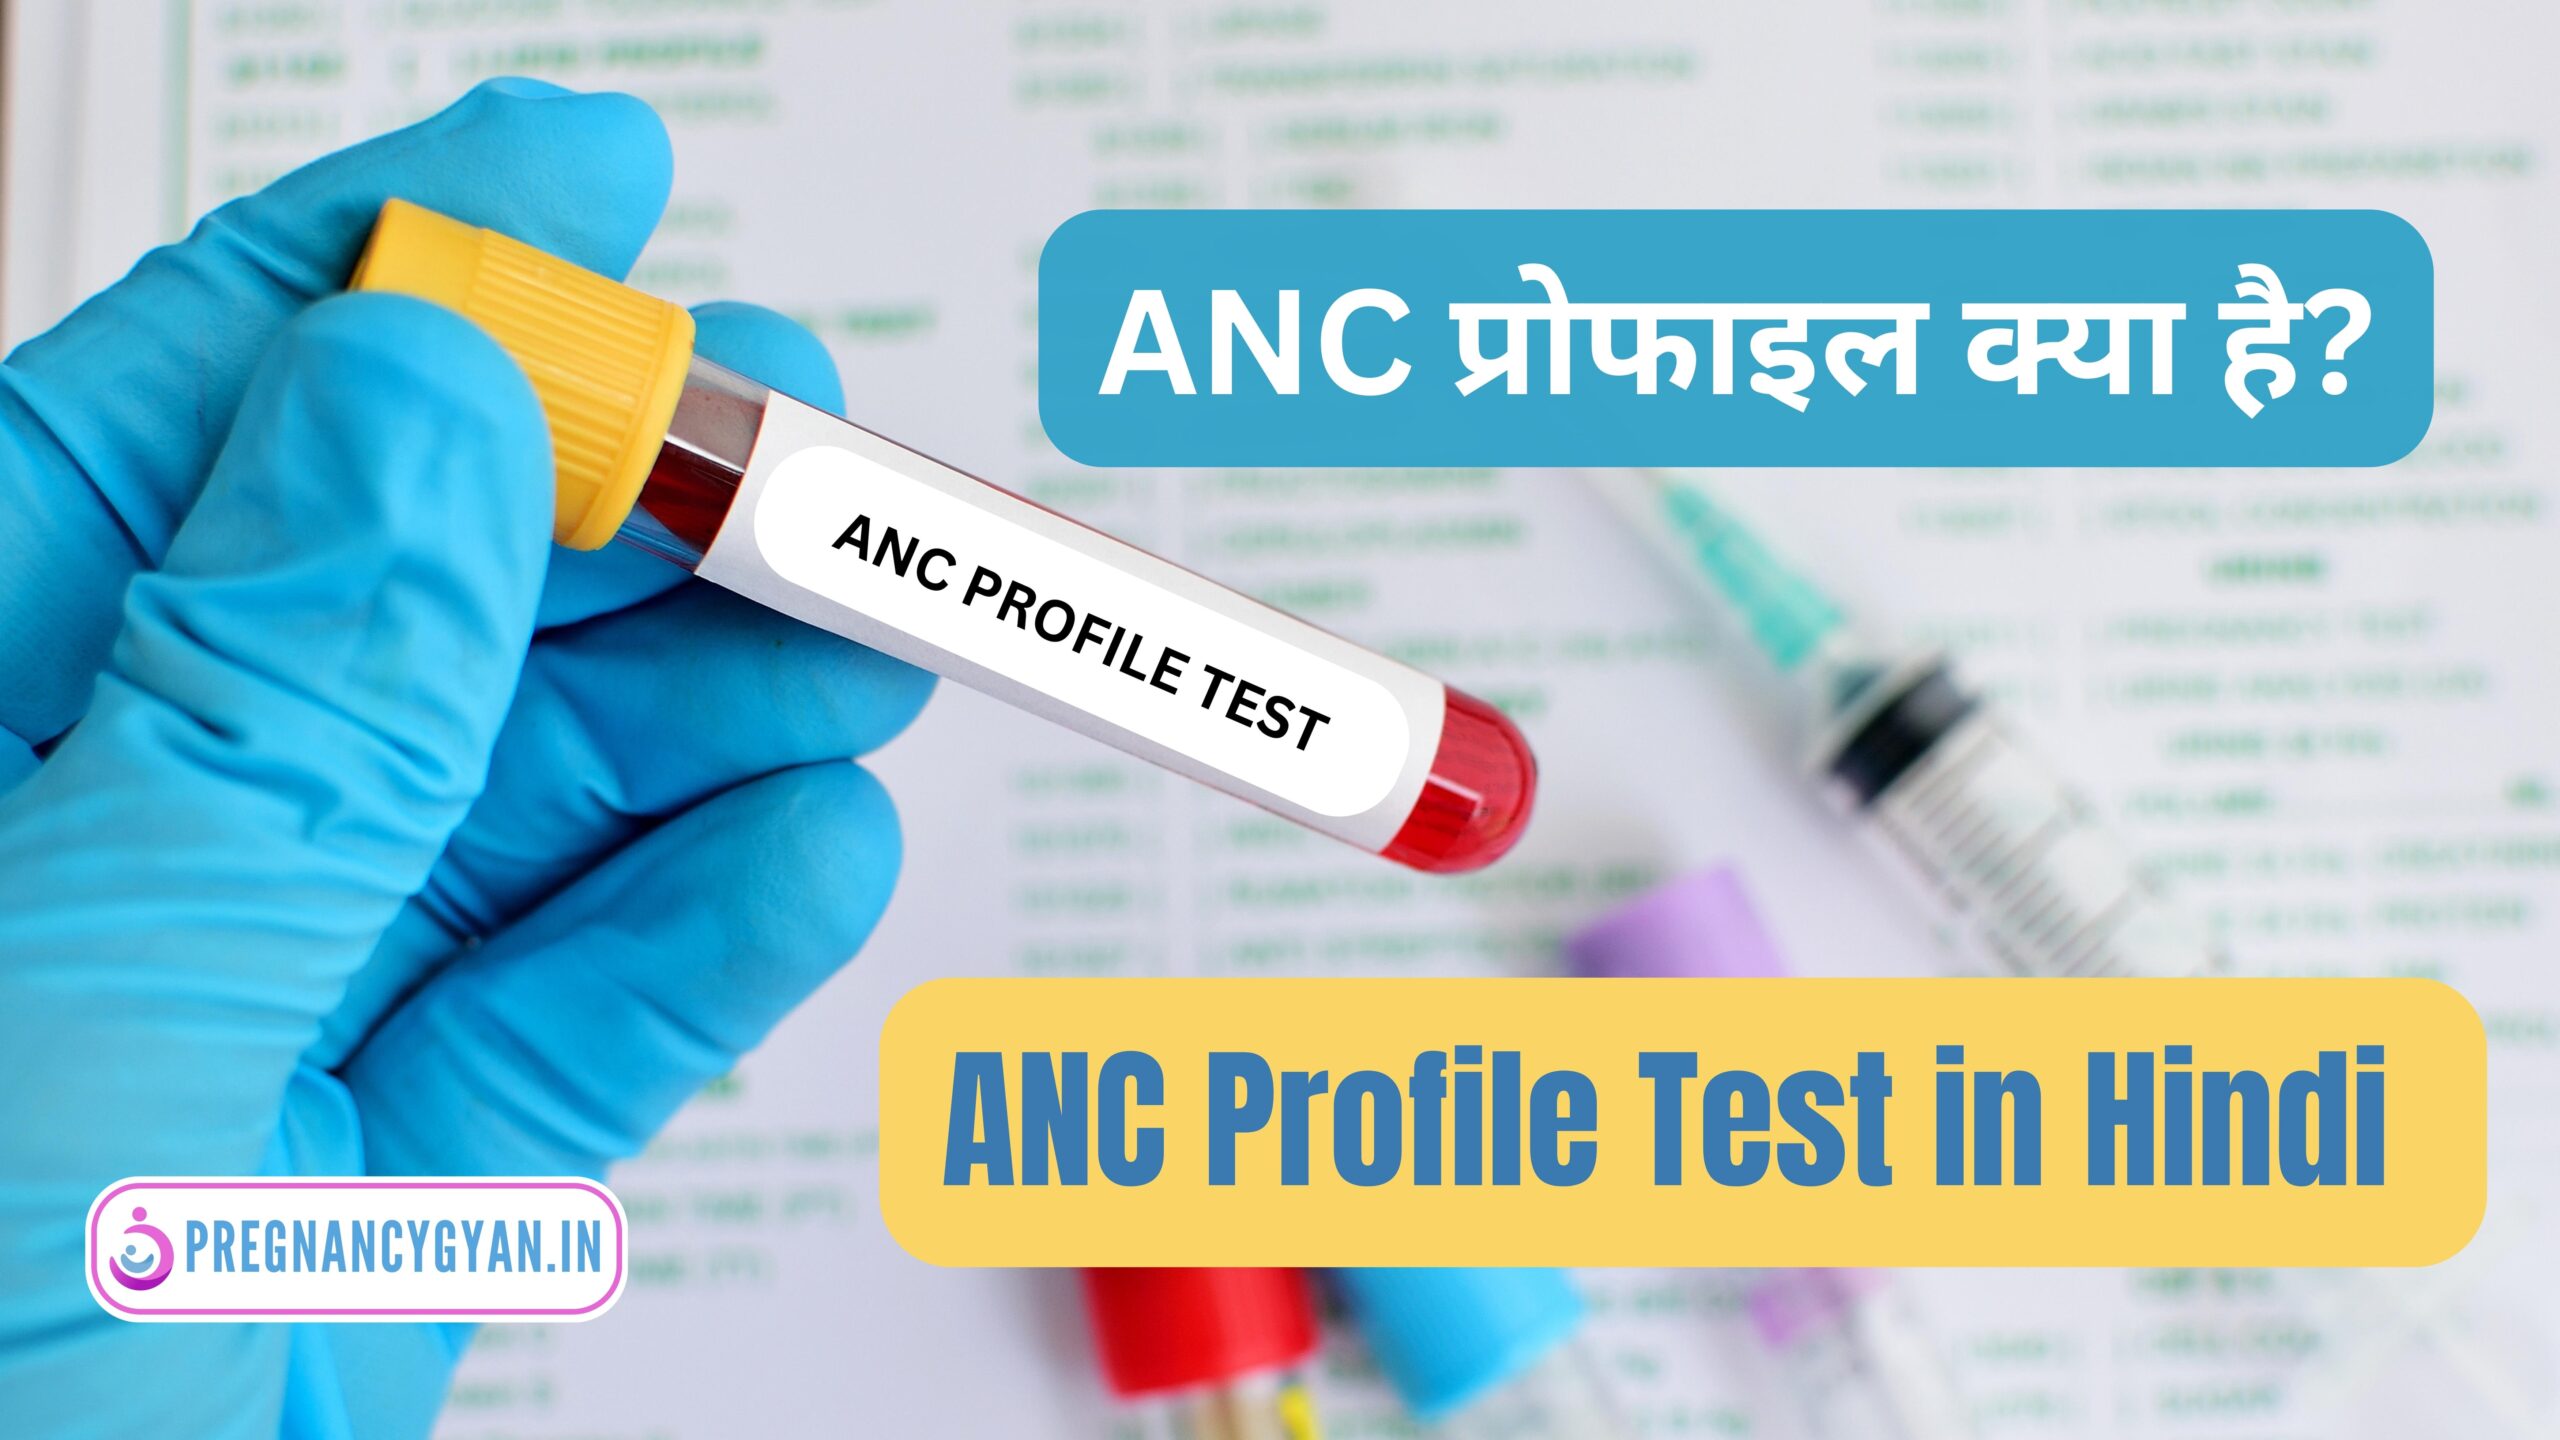 ANC Profile Test In Pregnancy in Hindi